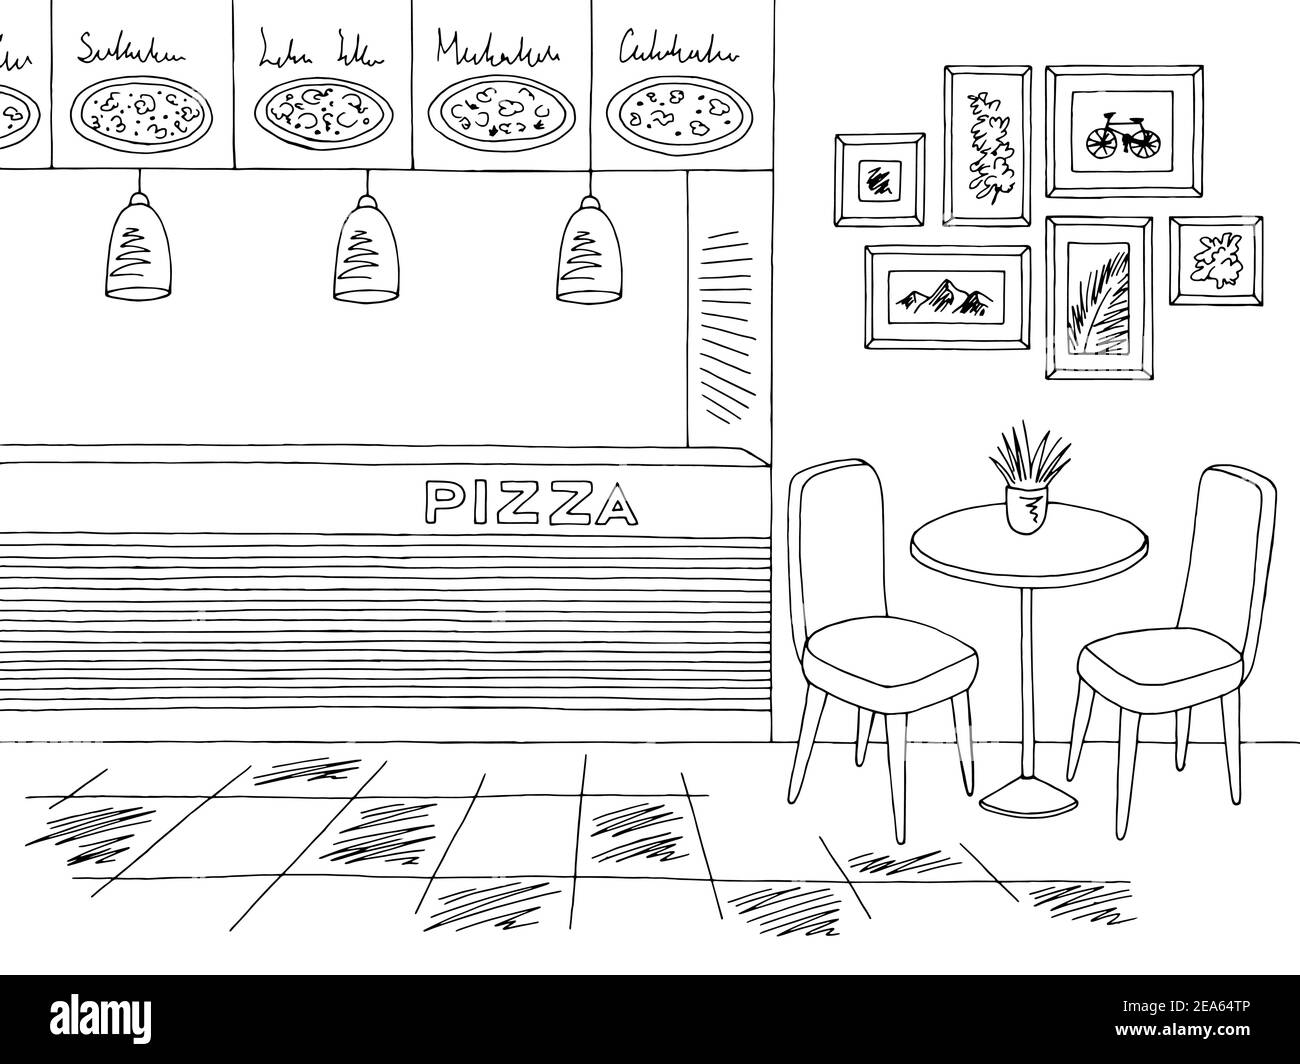 Pizza restaurant interior fast food court graphic black white sketch illustration vector Stock Vector